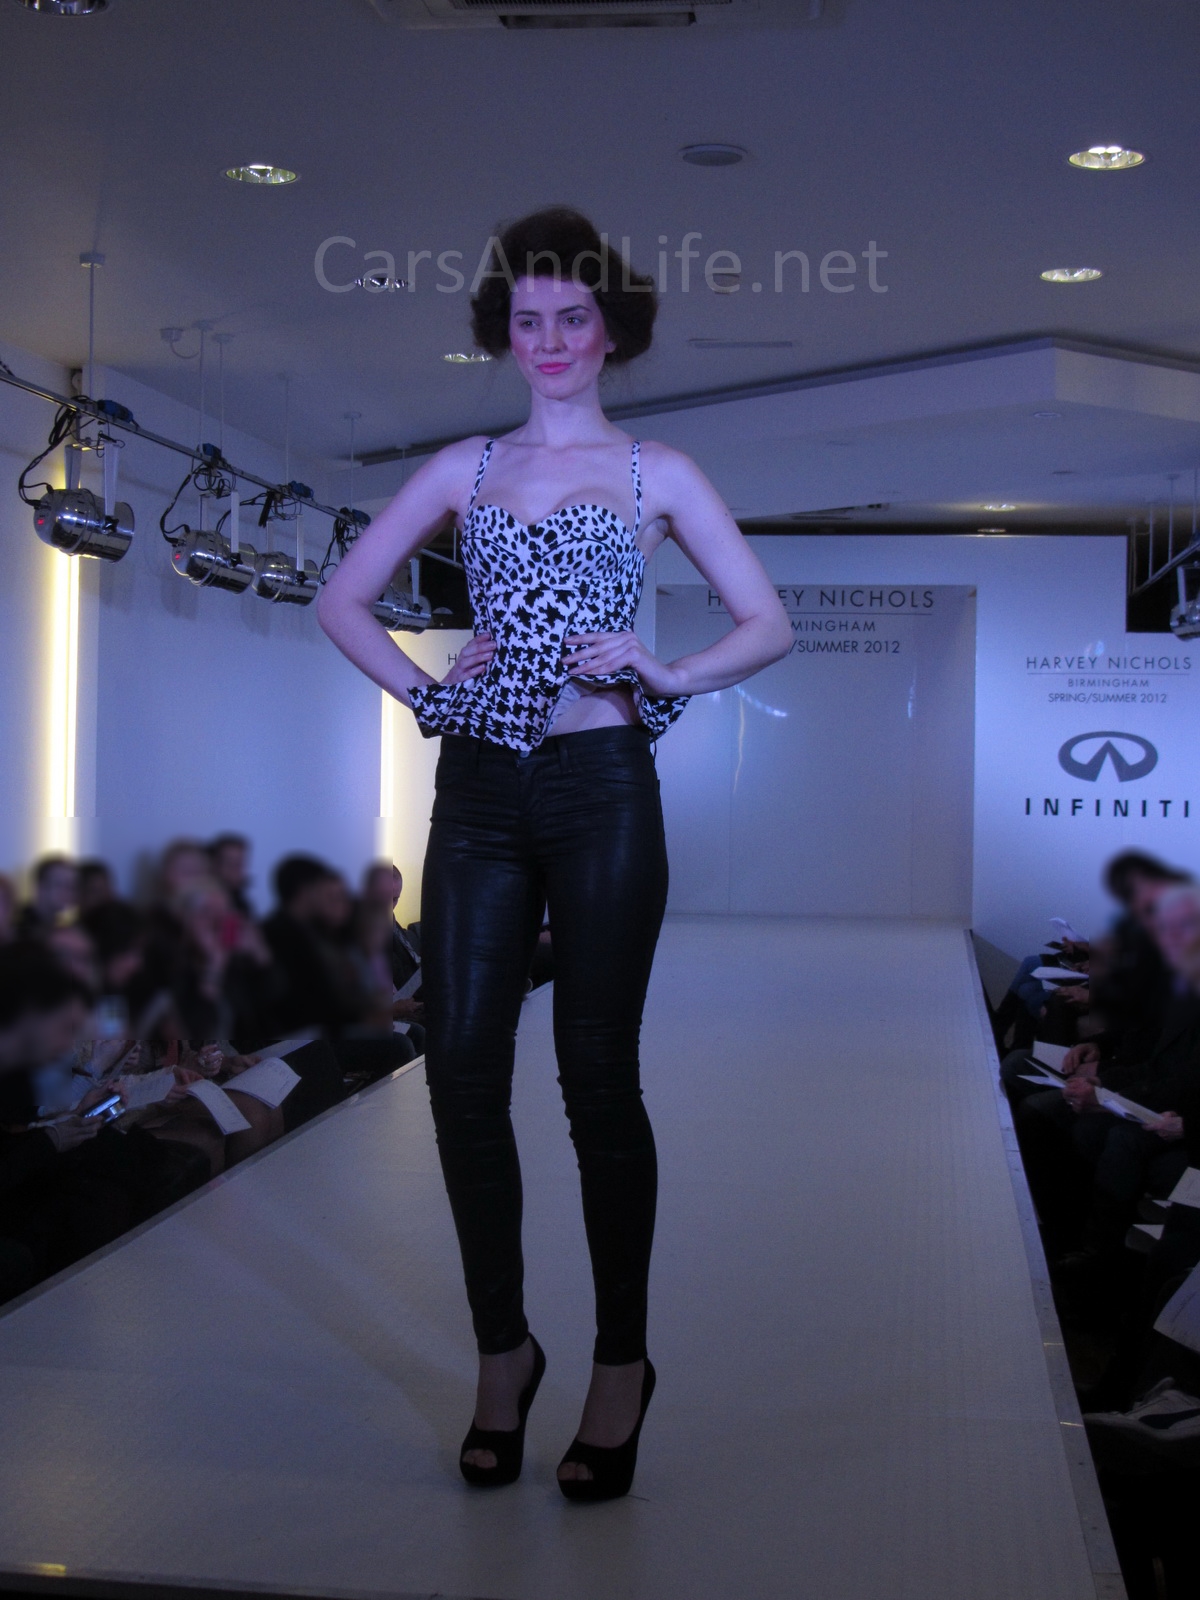 Harvey Nichols Birmingham Fashion Show 2012 + Infiniti - Cars  Life ...